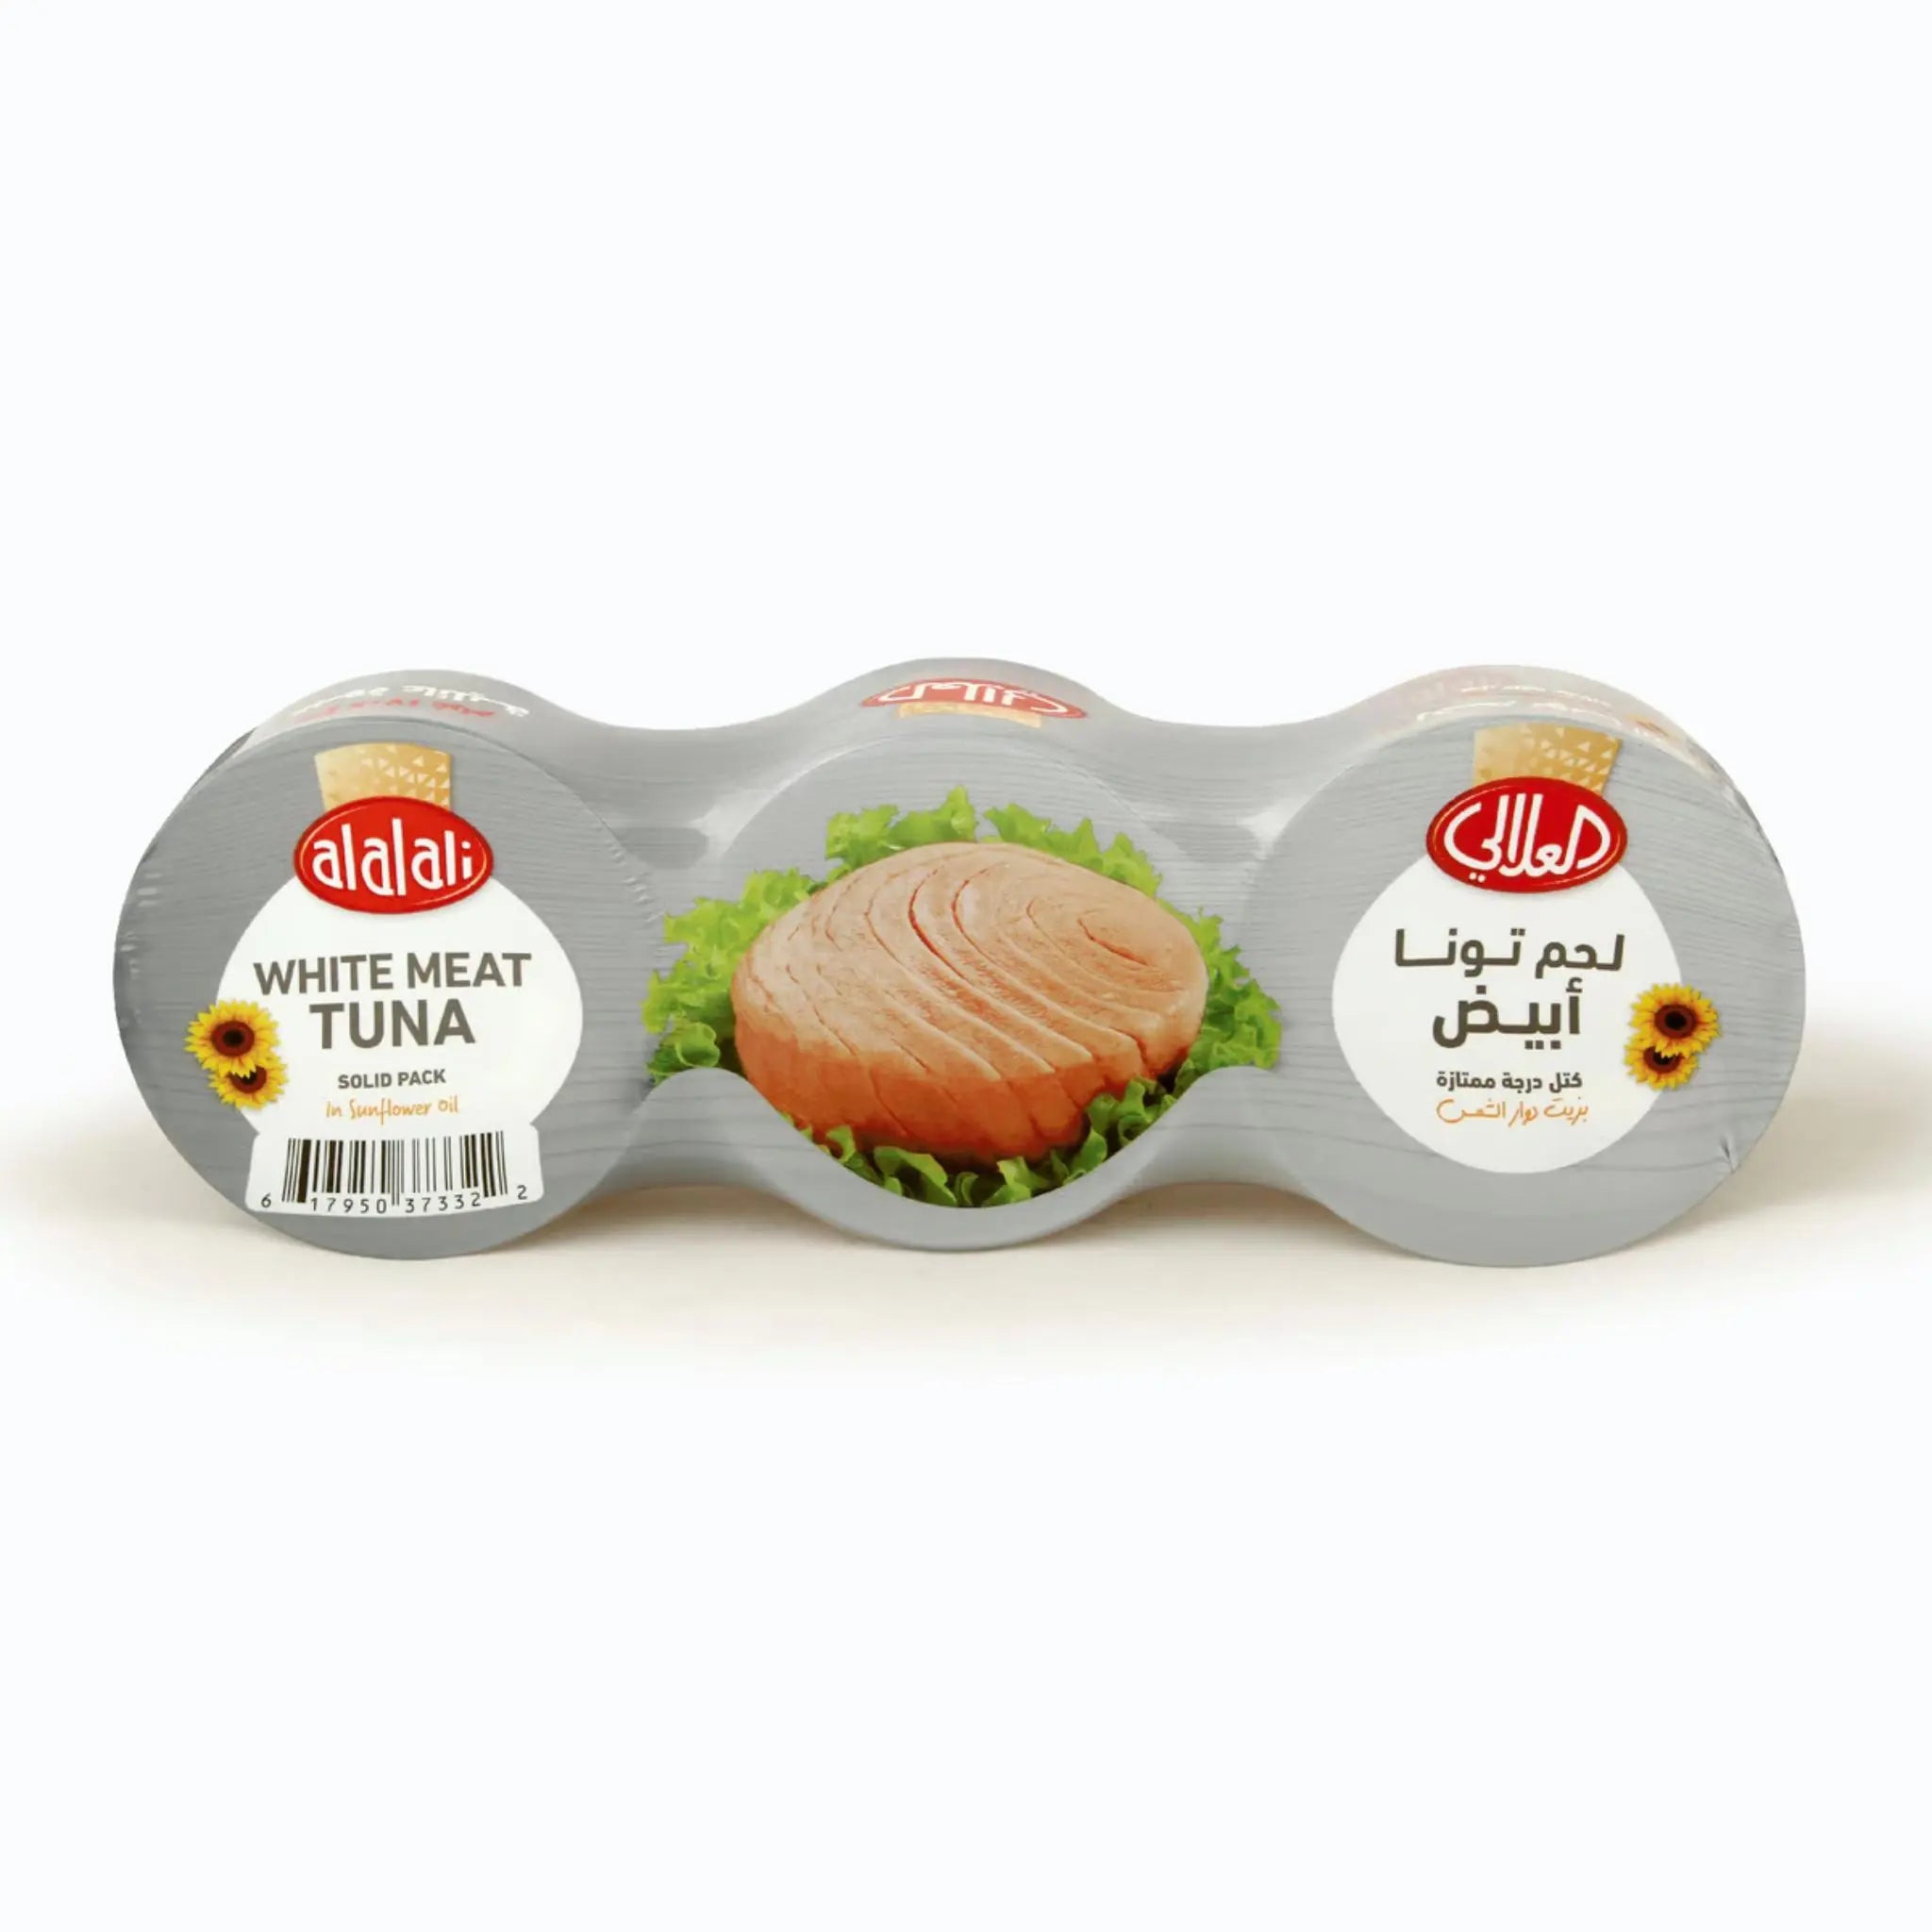 Al Alali White Meat Tuna in Sunflower Oil Family Pack 3's - 16x3x170g (1 Carton) Marino.AE